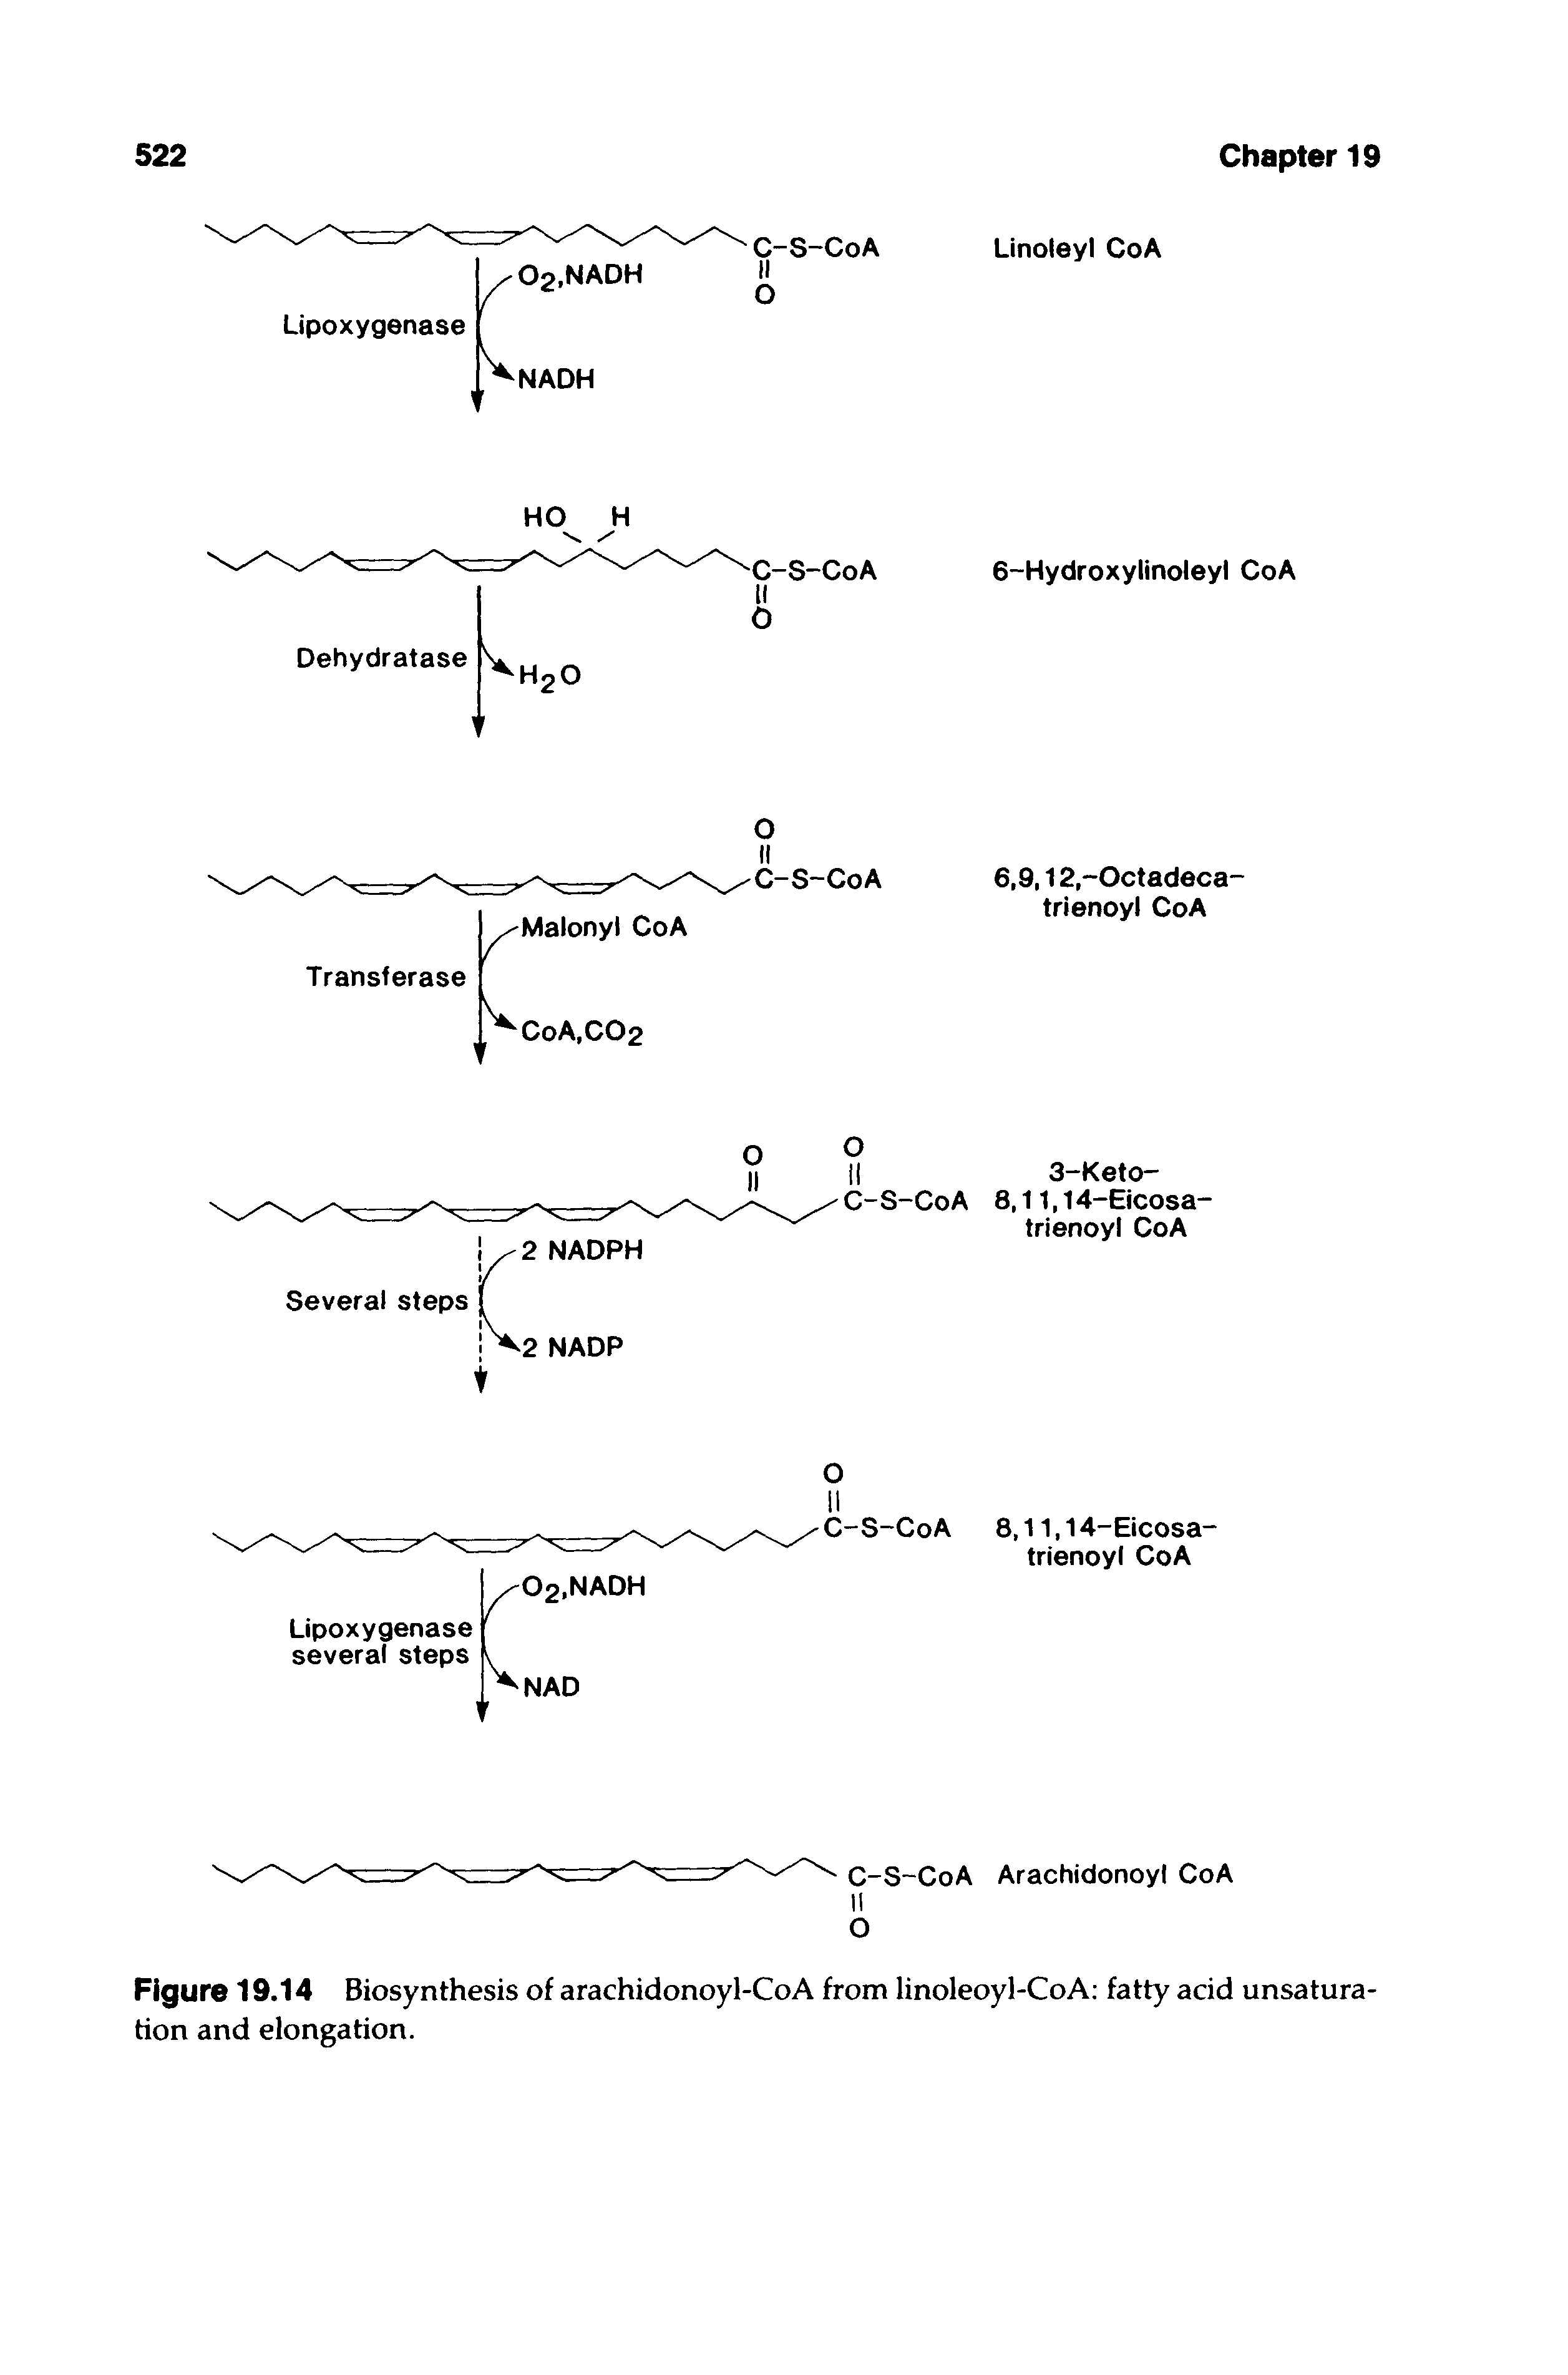 Figure 19.14 Biosynthesis of arachidonoyl-CoA from linoleoyl-CoA fatty acid unsaturation and elongation.